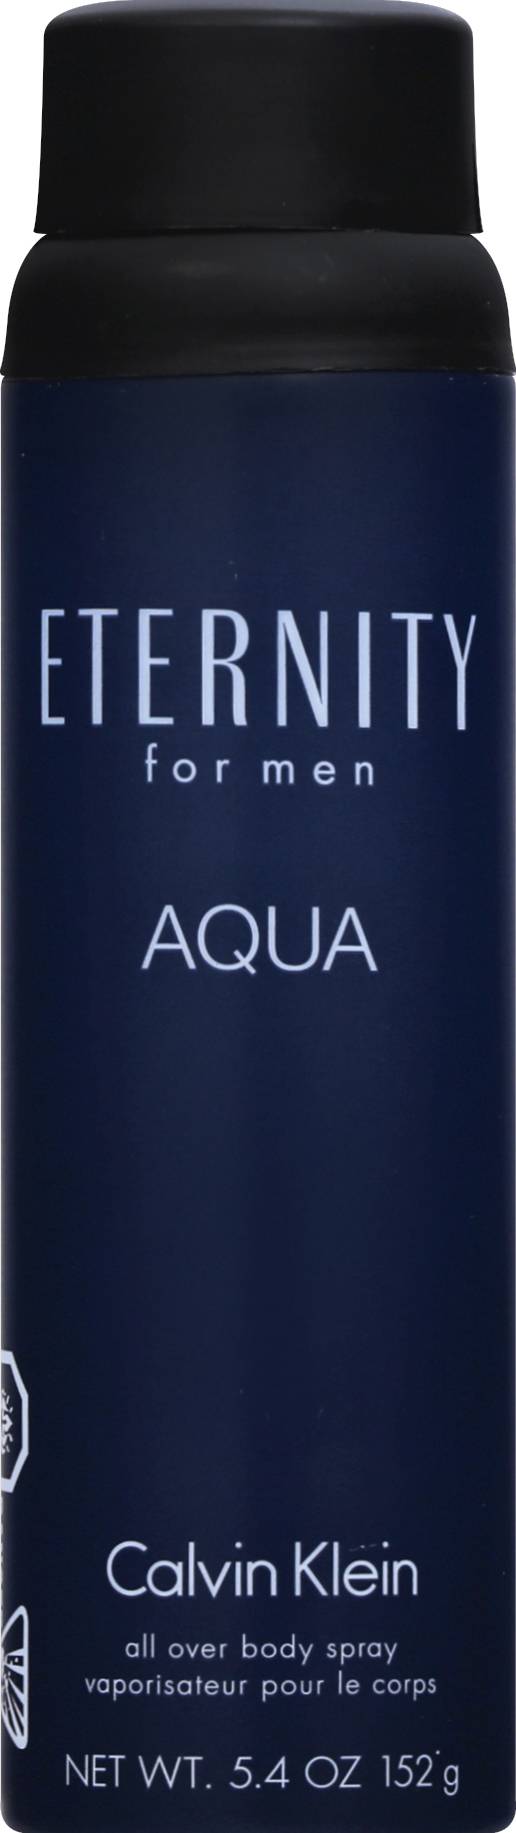 Calvin Klein Eternity Men's Aqua Body Spray